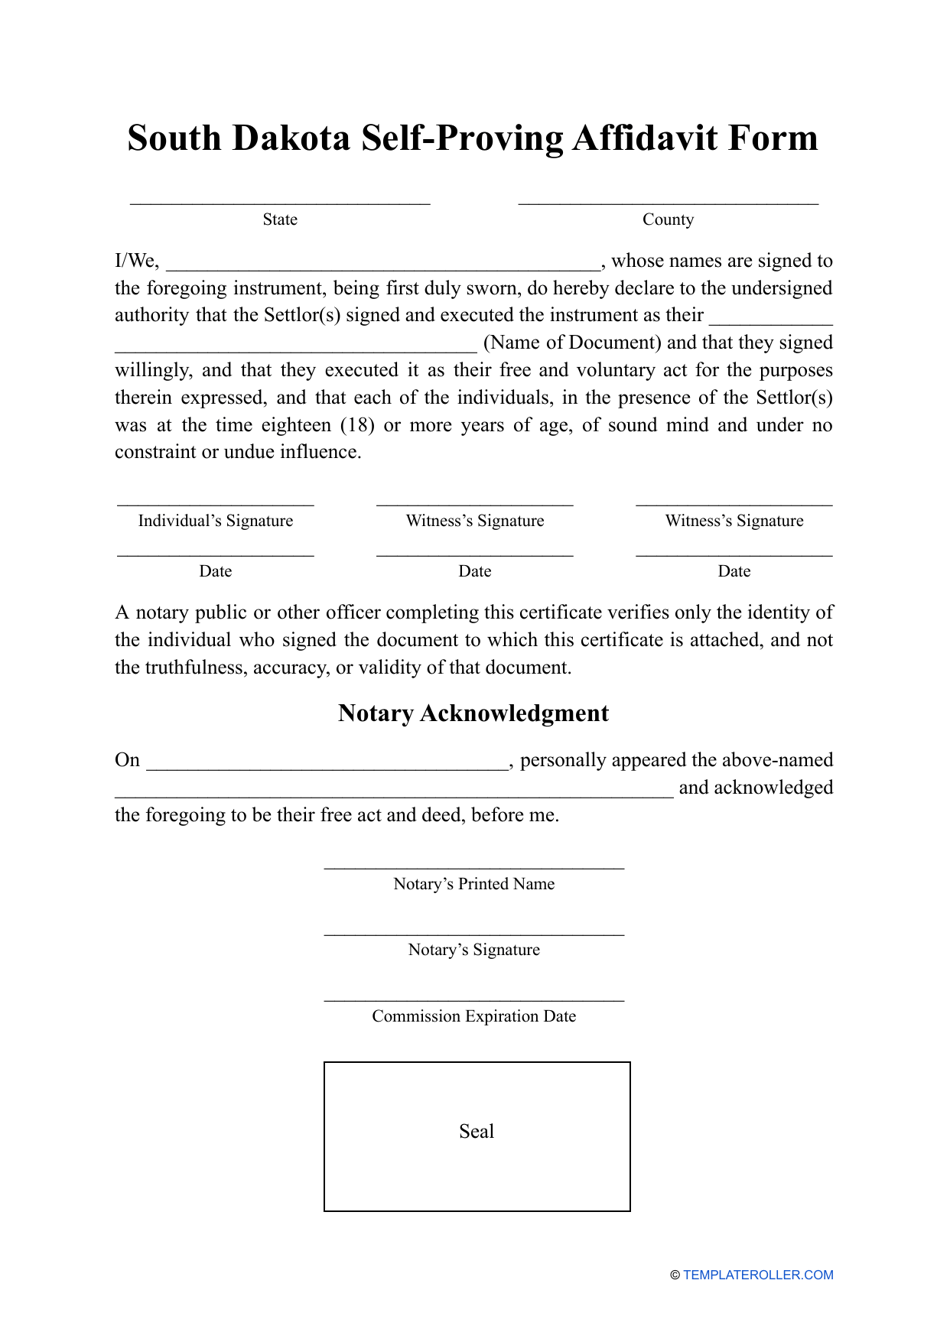 Self-proving Affidavit Form - South Dakota, Page 1